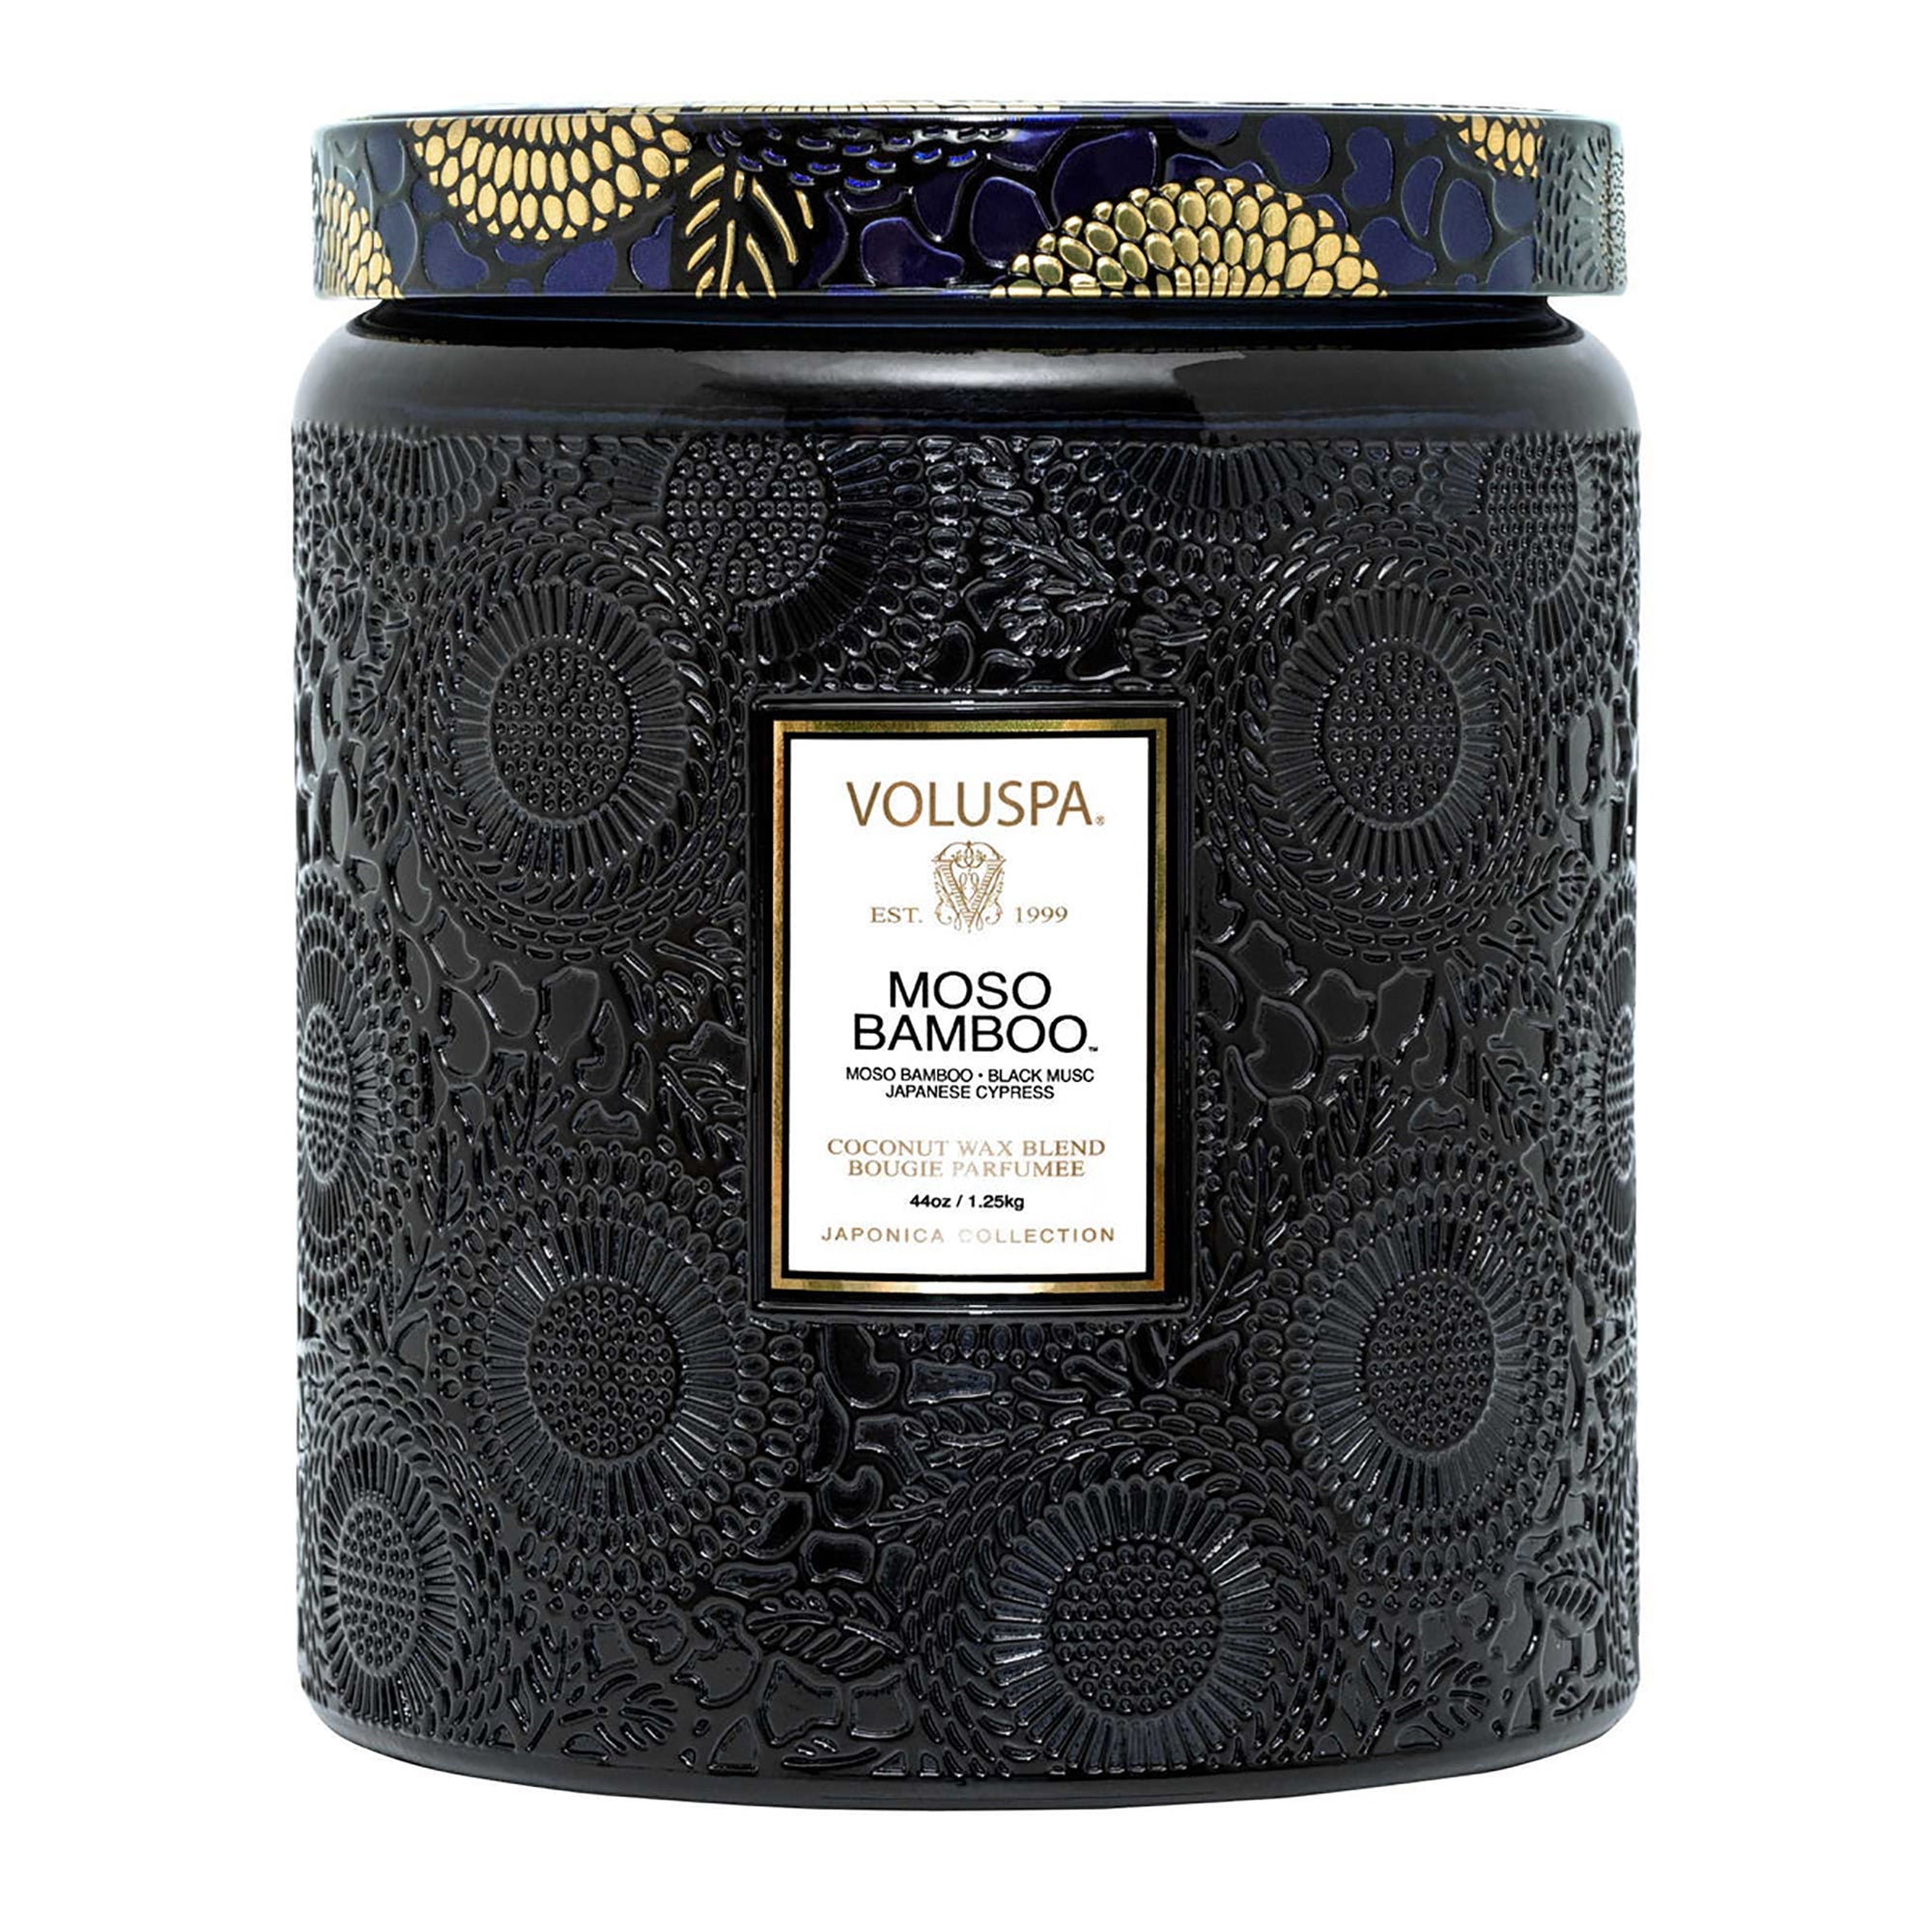 Voluspa Japonica Lux Jar Candle - 44oz / Moso Bamboo